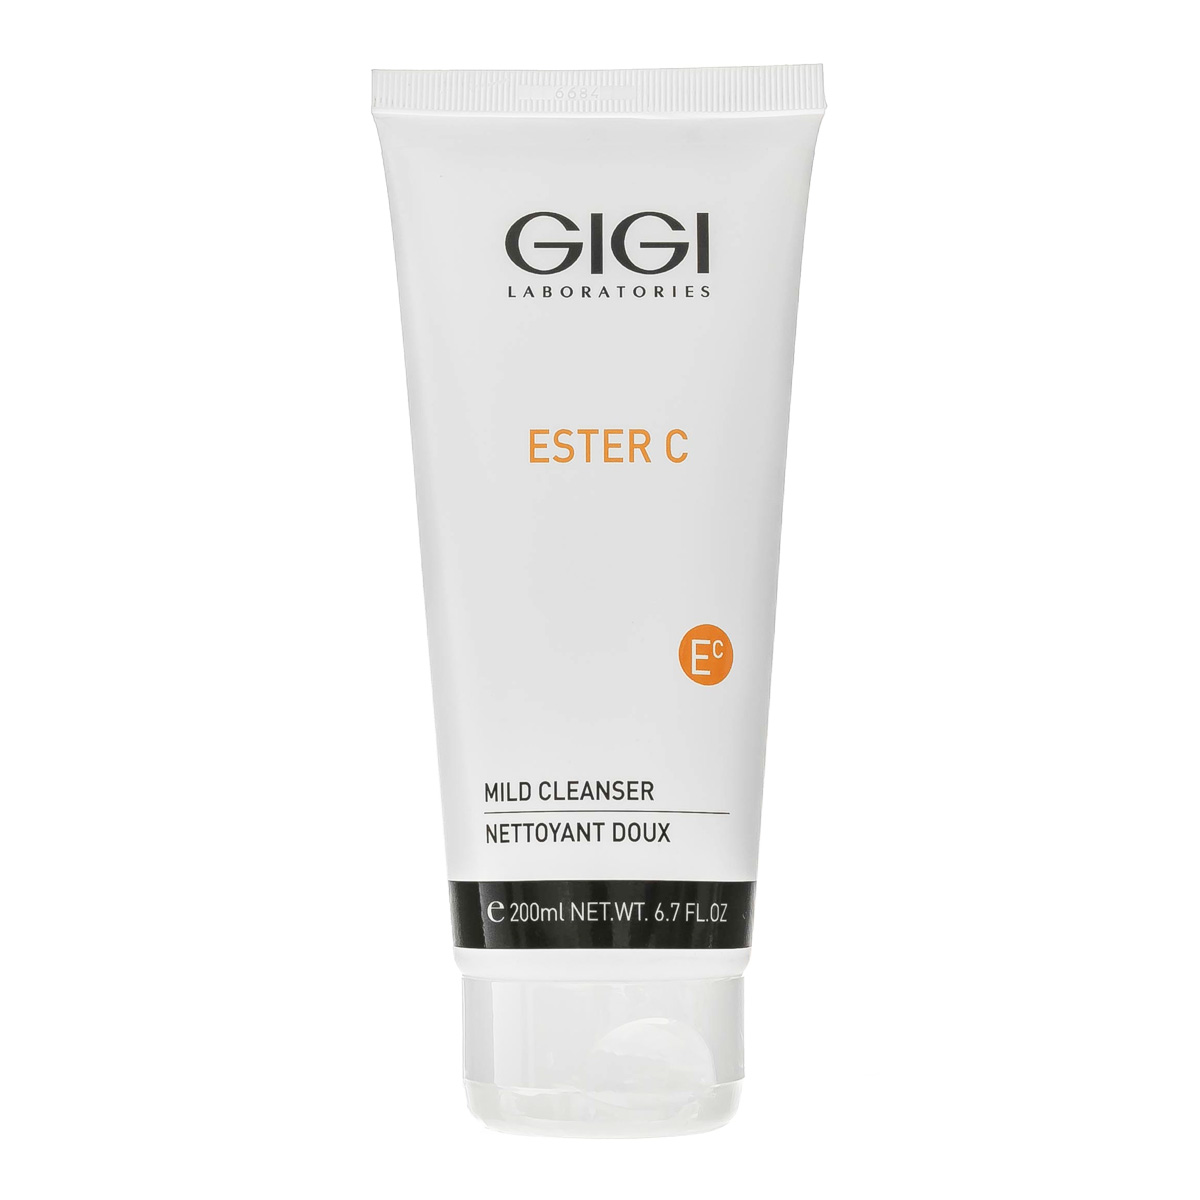 GiGi Гель очищающий мягкий Mild Cleanser, 200 мл (GiGi, Ester C)